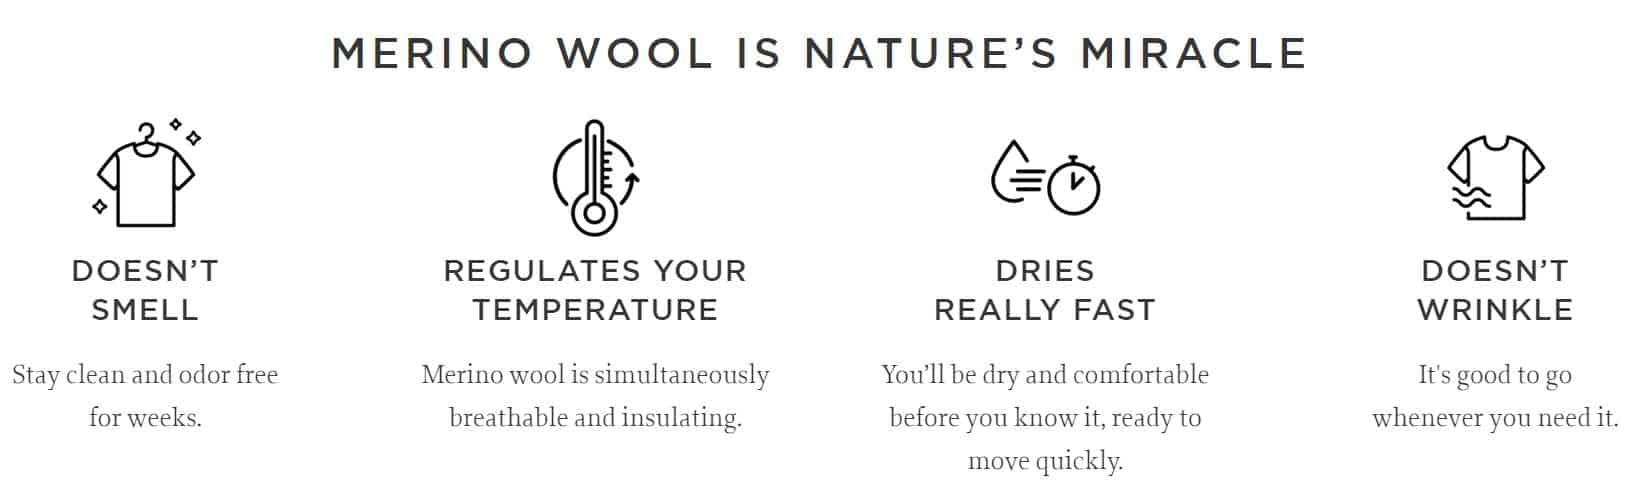 Top 3 Health Benefits of Merino Wool Clothing